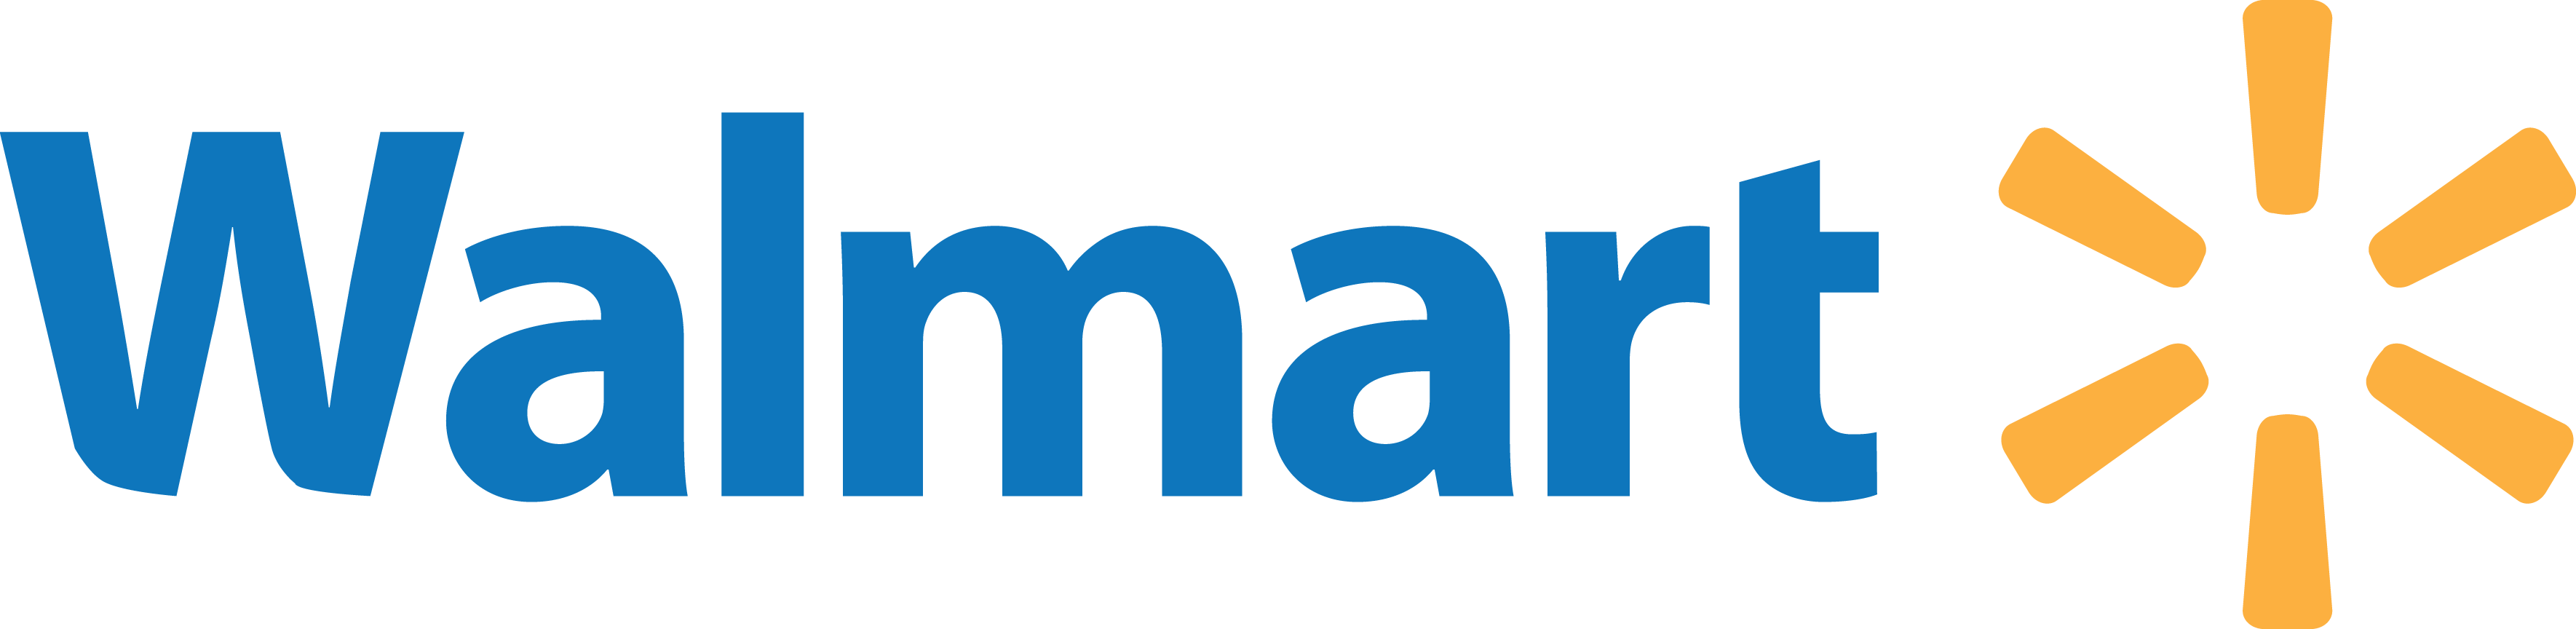 Walmart logo with yellow asterick looking symbol